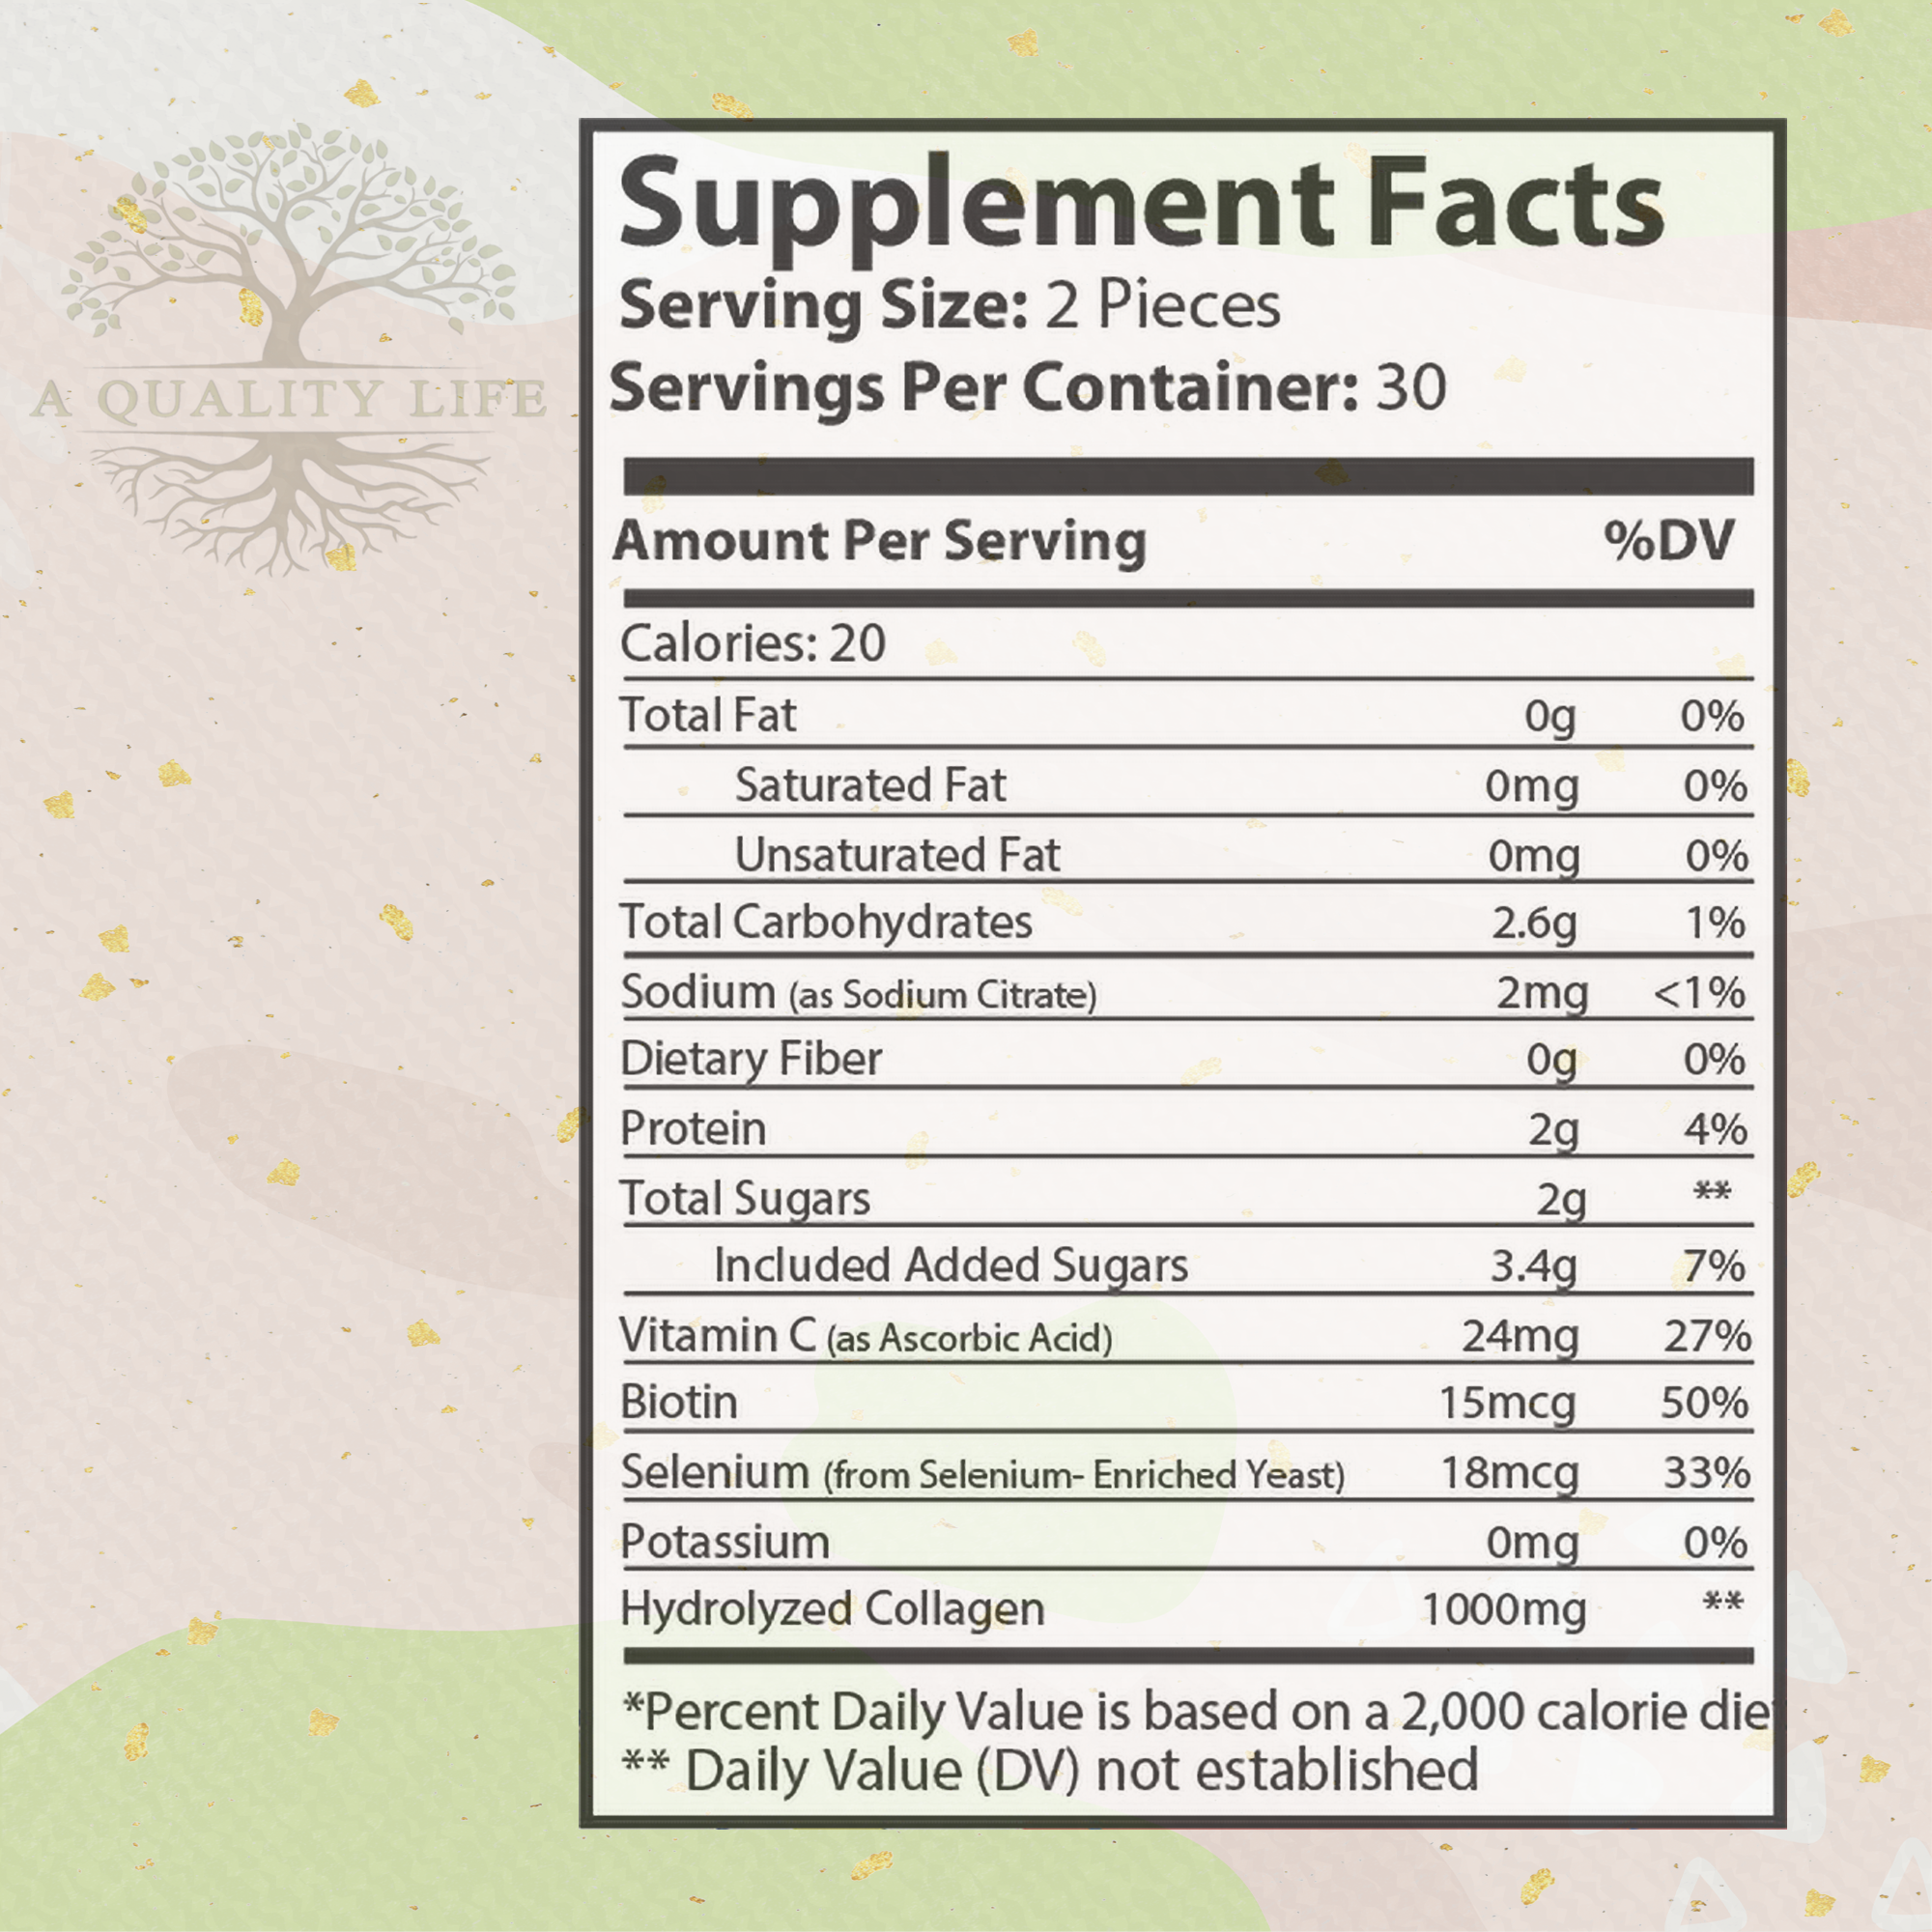 Supplement Facts of Collagen Gummies